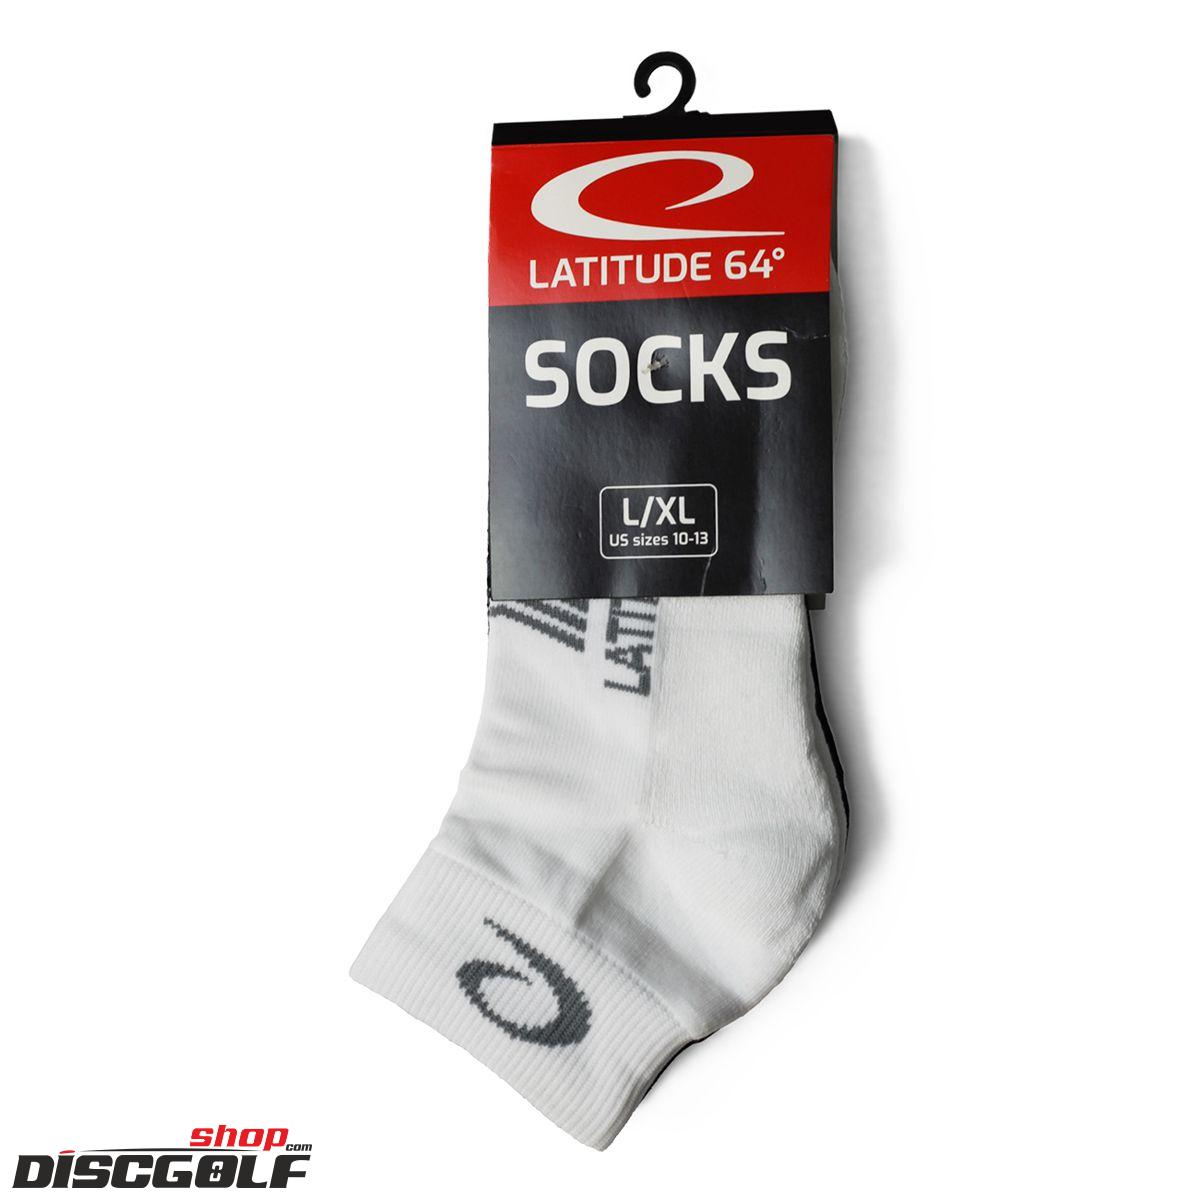 Latitude 64º Ponožky 2 páry - velikost L/XL 10-13 (discgolf)